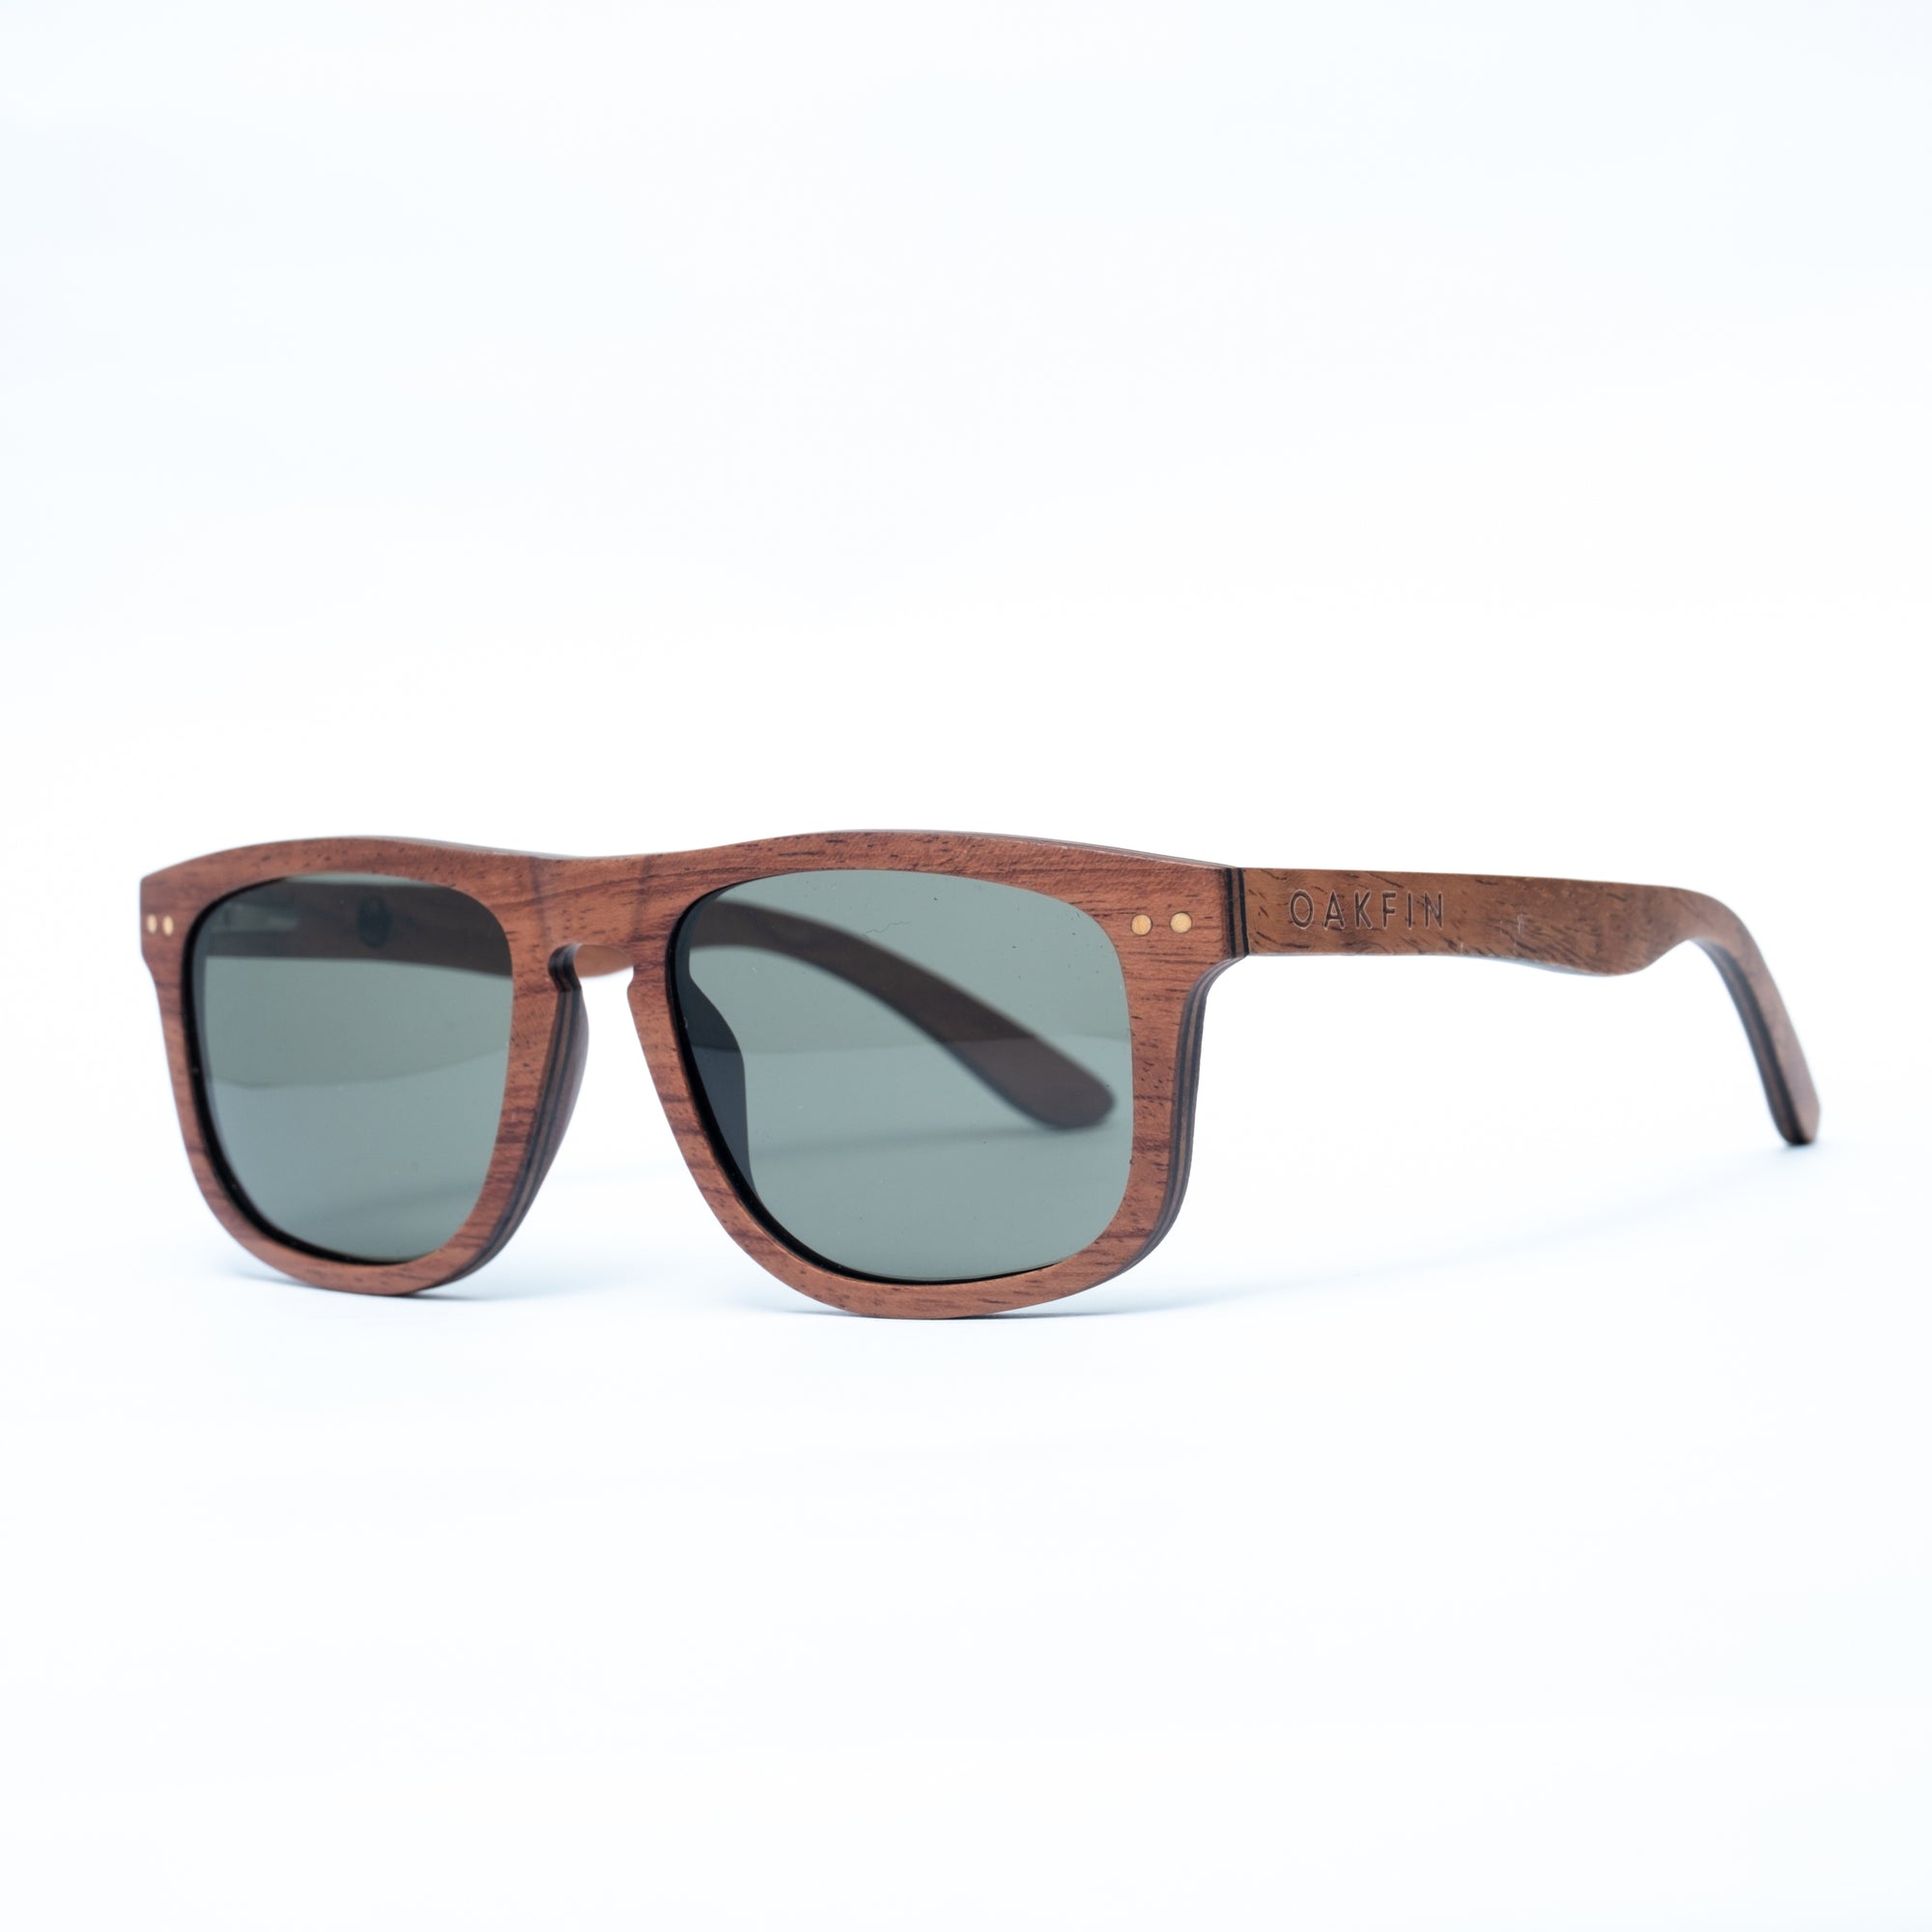 Black Cherry Wood Sunglasses - Oakfin